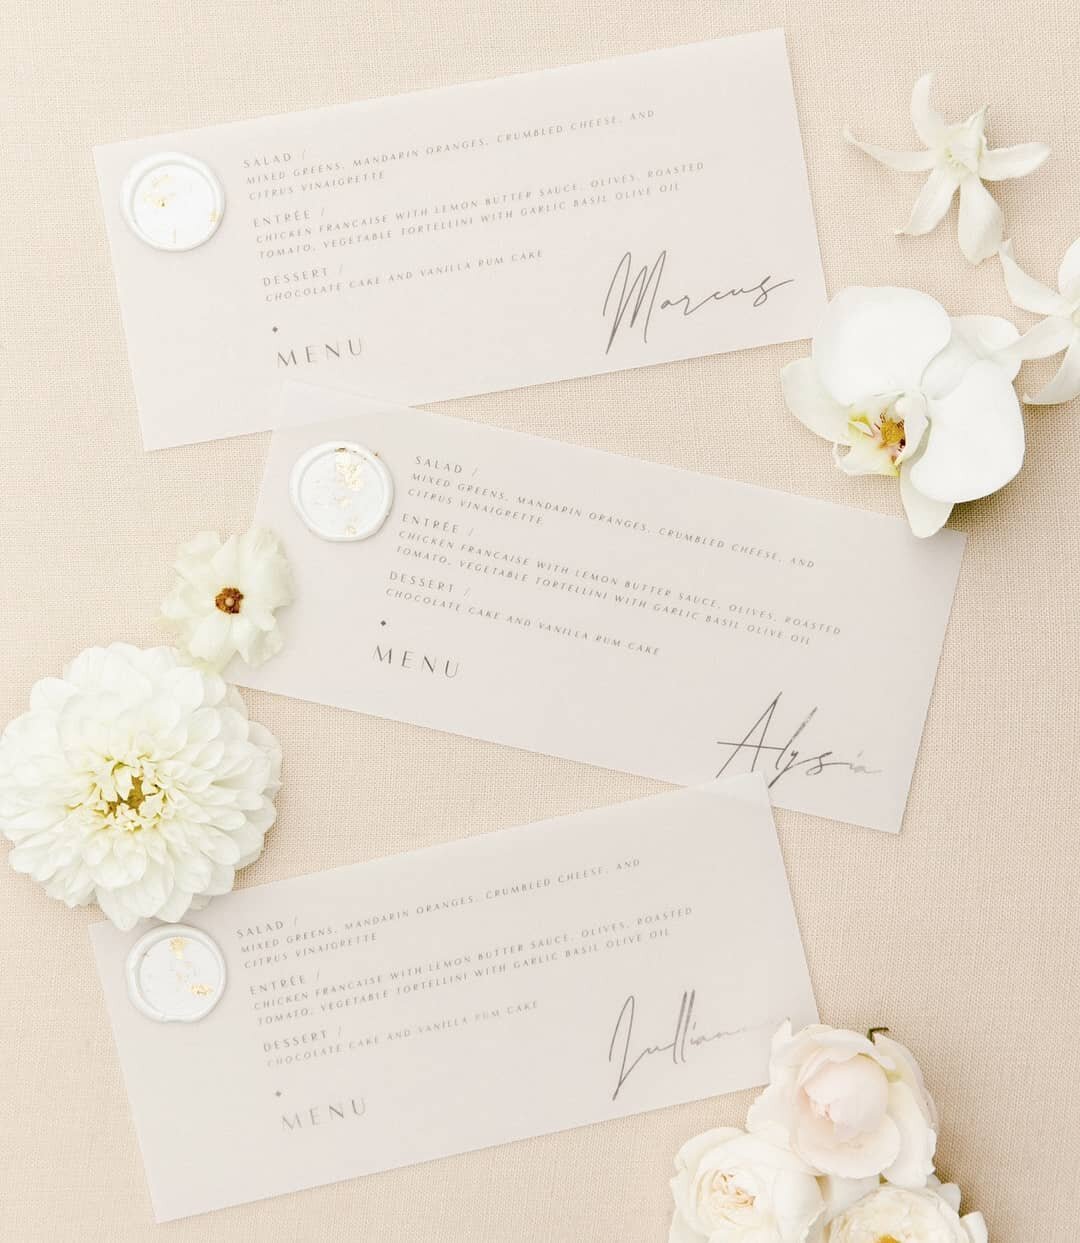 MENU CARDS 🖤 One of my favorite reception details to create! Vellum menus with white &amp; gold leaf wax seals. I love how @jasmineleephoto captured these details! 

.
.
.

Planning &amp; Design: @ksawweddings 
Florals: @myweddingsense 
HMUA: @qu